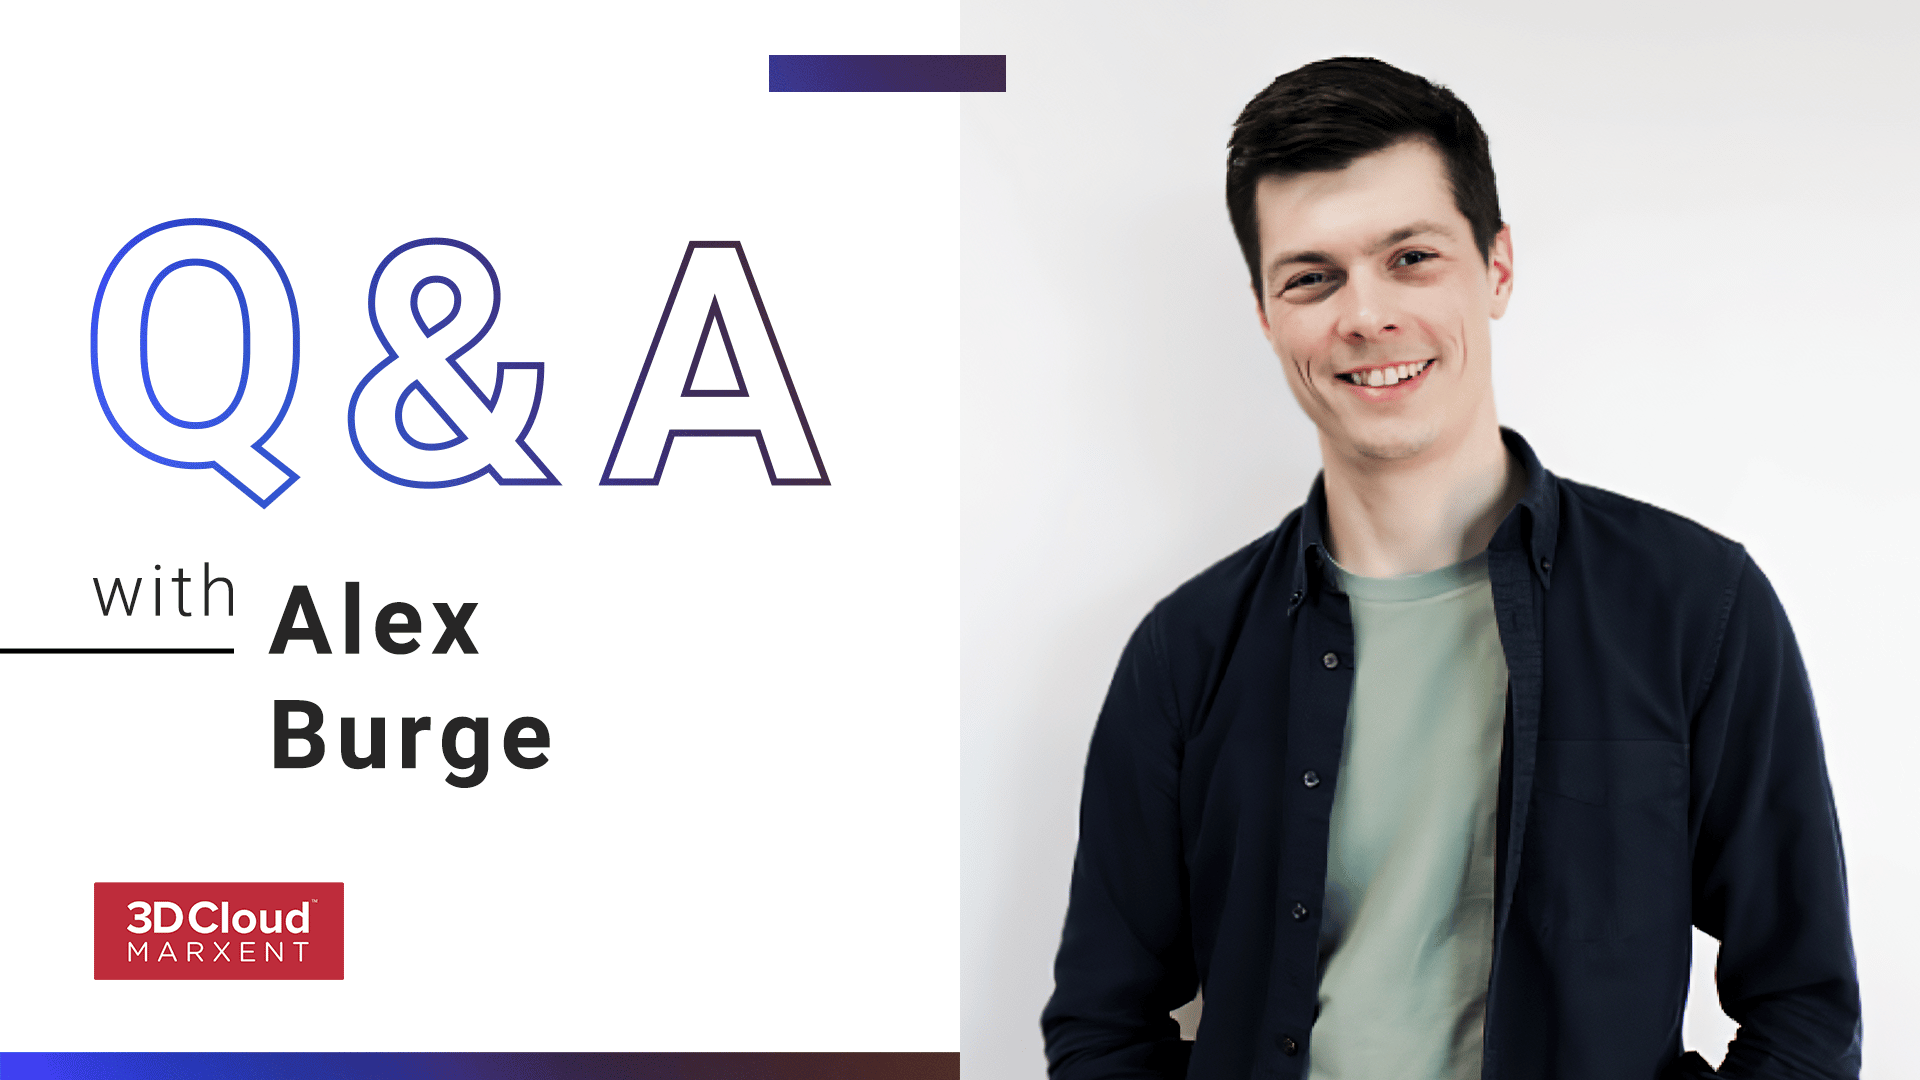 Employee Q&A with Alex Burge